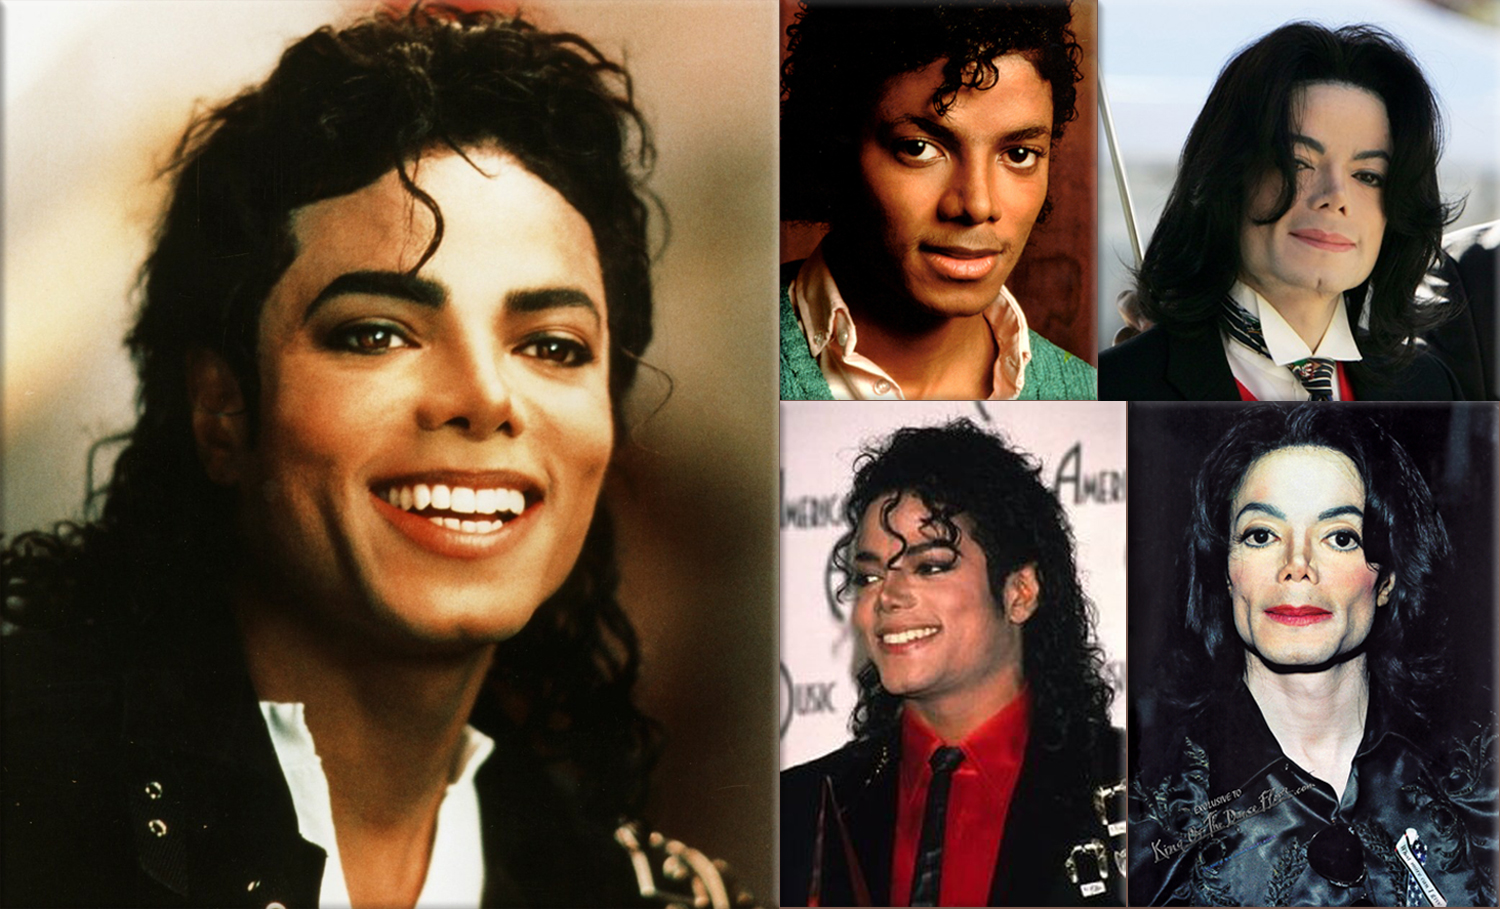 Michael Joseph Jackson (August 29, 1958 – June 25, 2009) was an American recording artist, entertainer, actor, businessman and philantropist